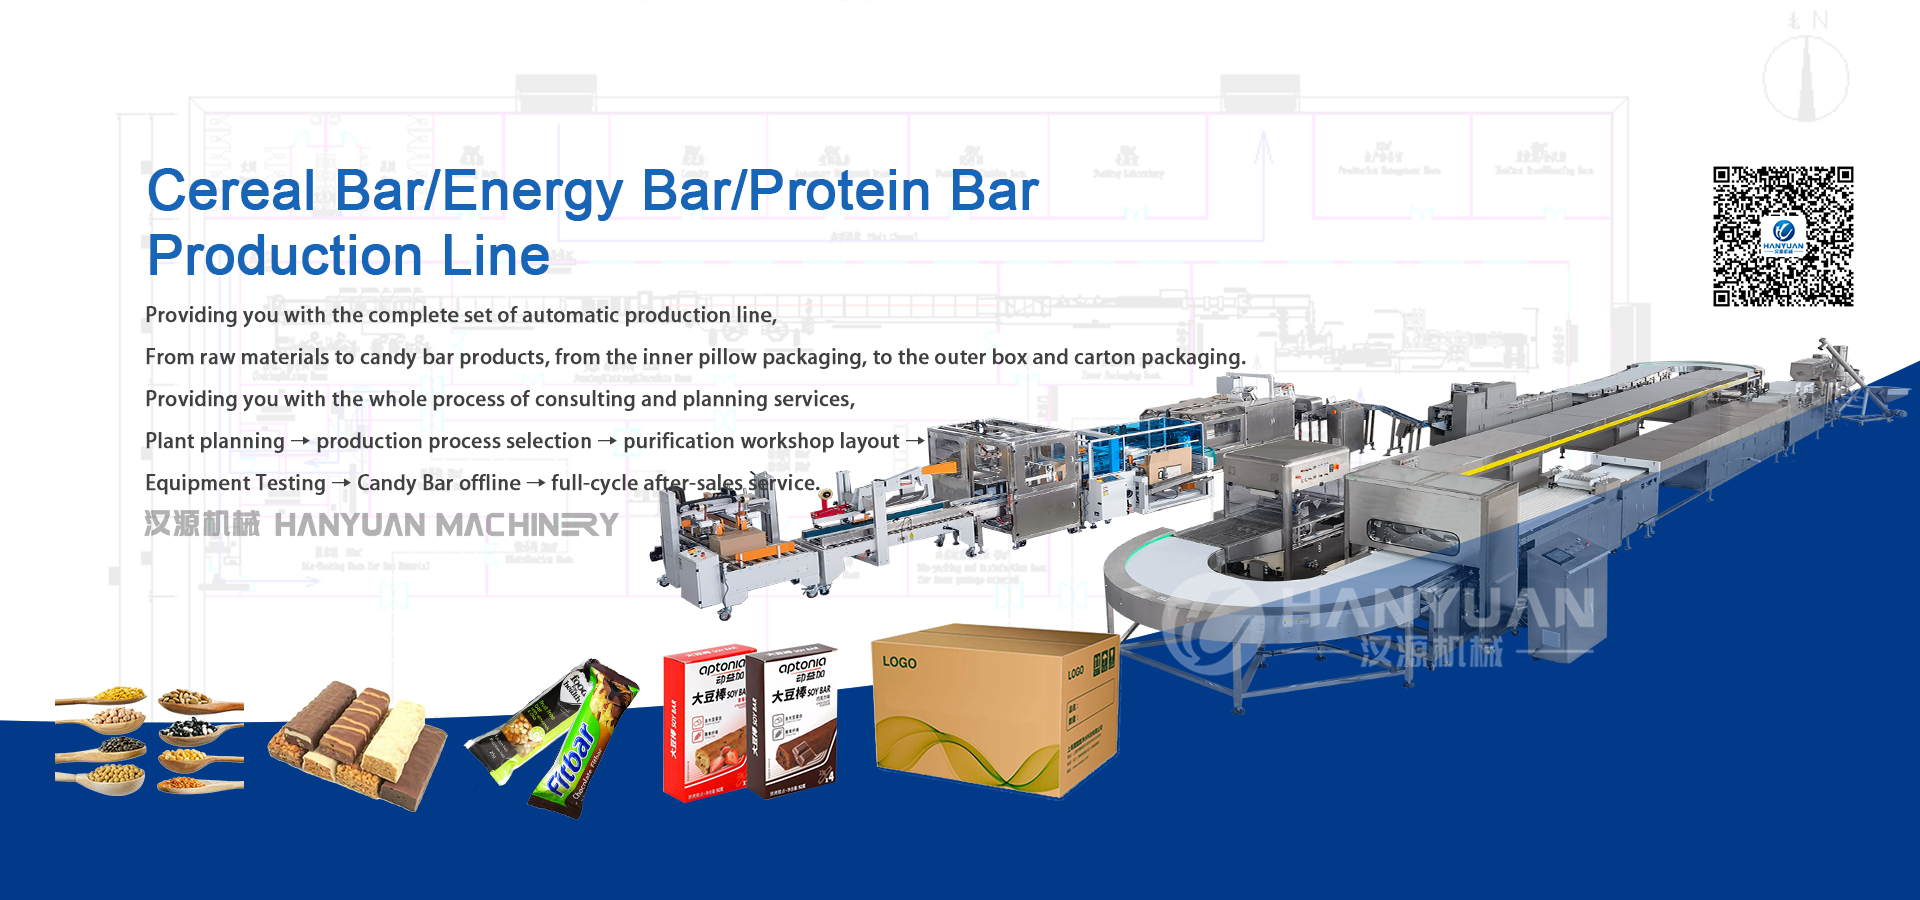 3.2 Energy Bar Production Line